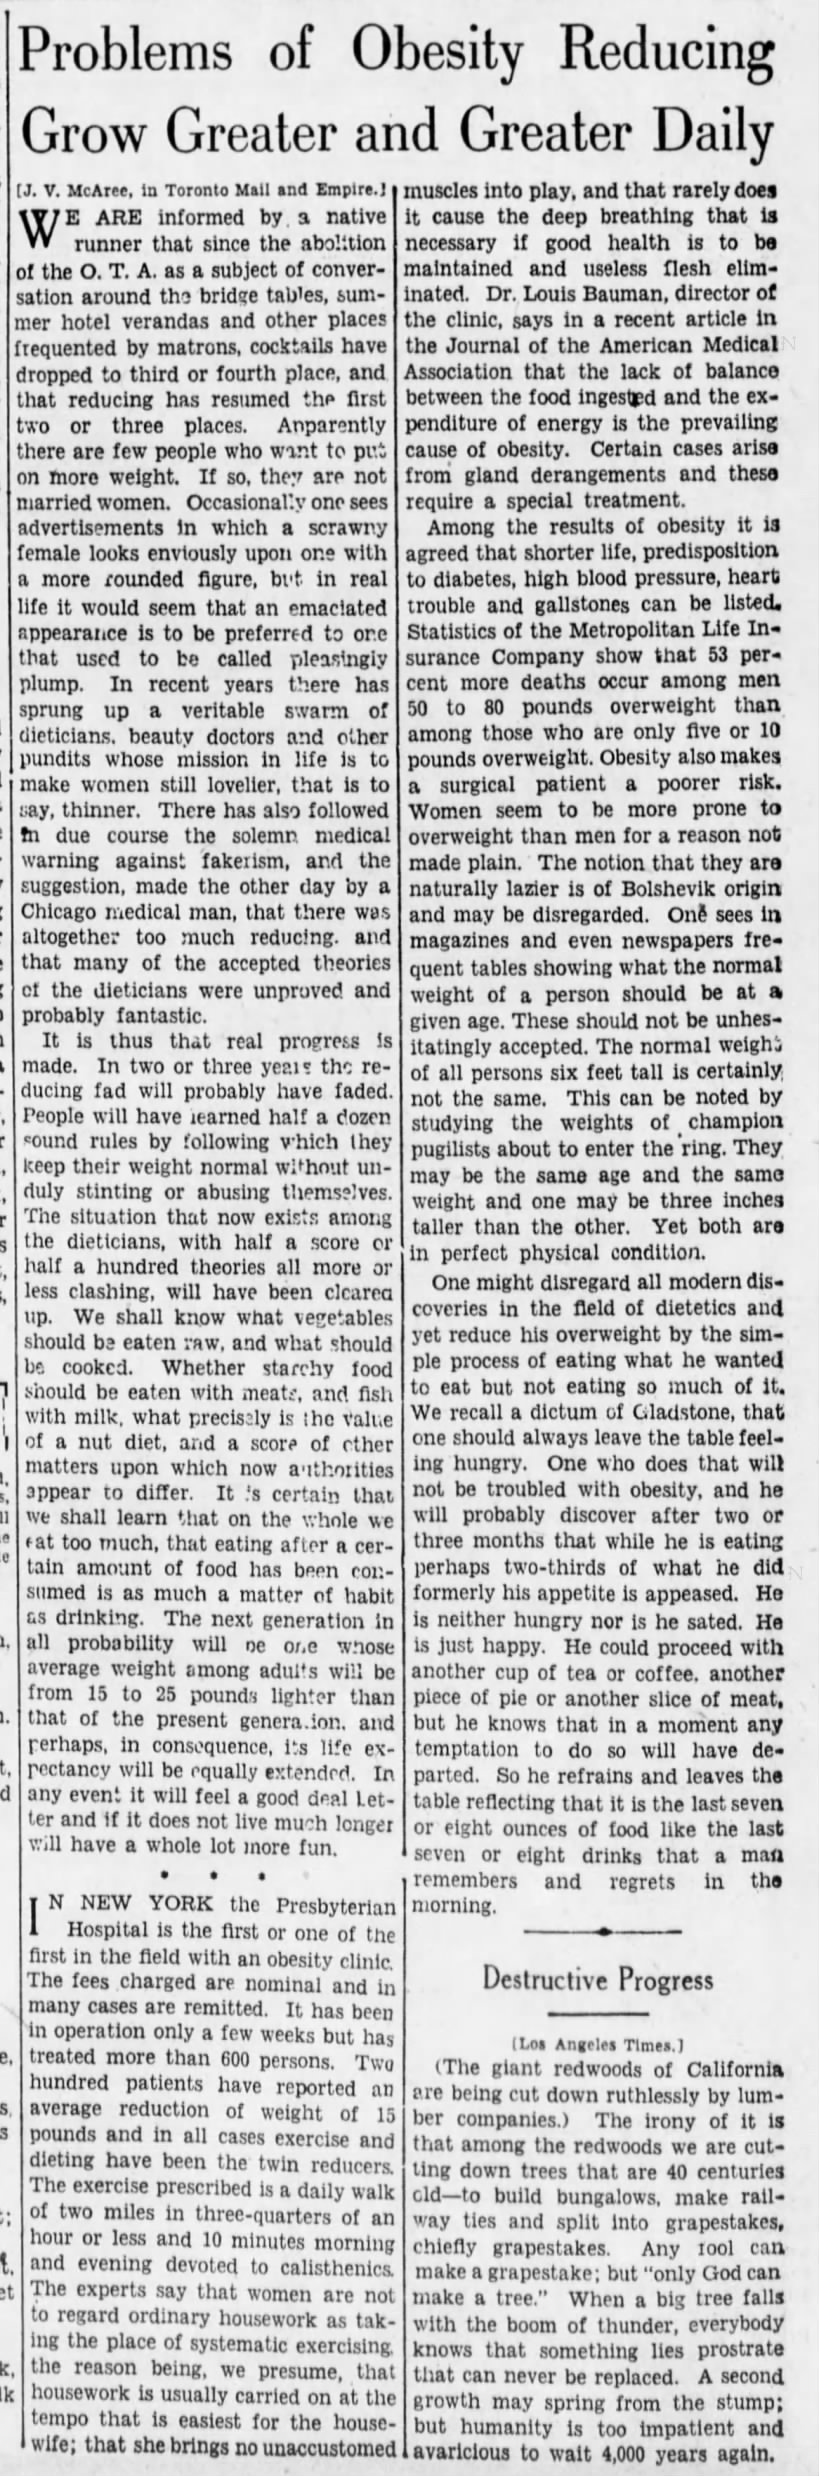 Obesity Problems - Toronto Mail & Empire. 21 AUG 1928 BrooklynEagle